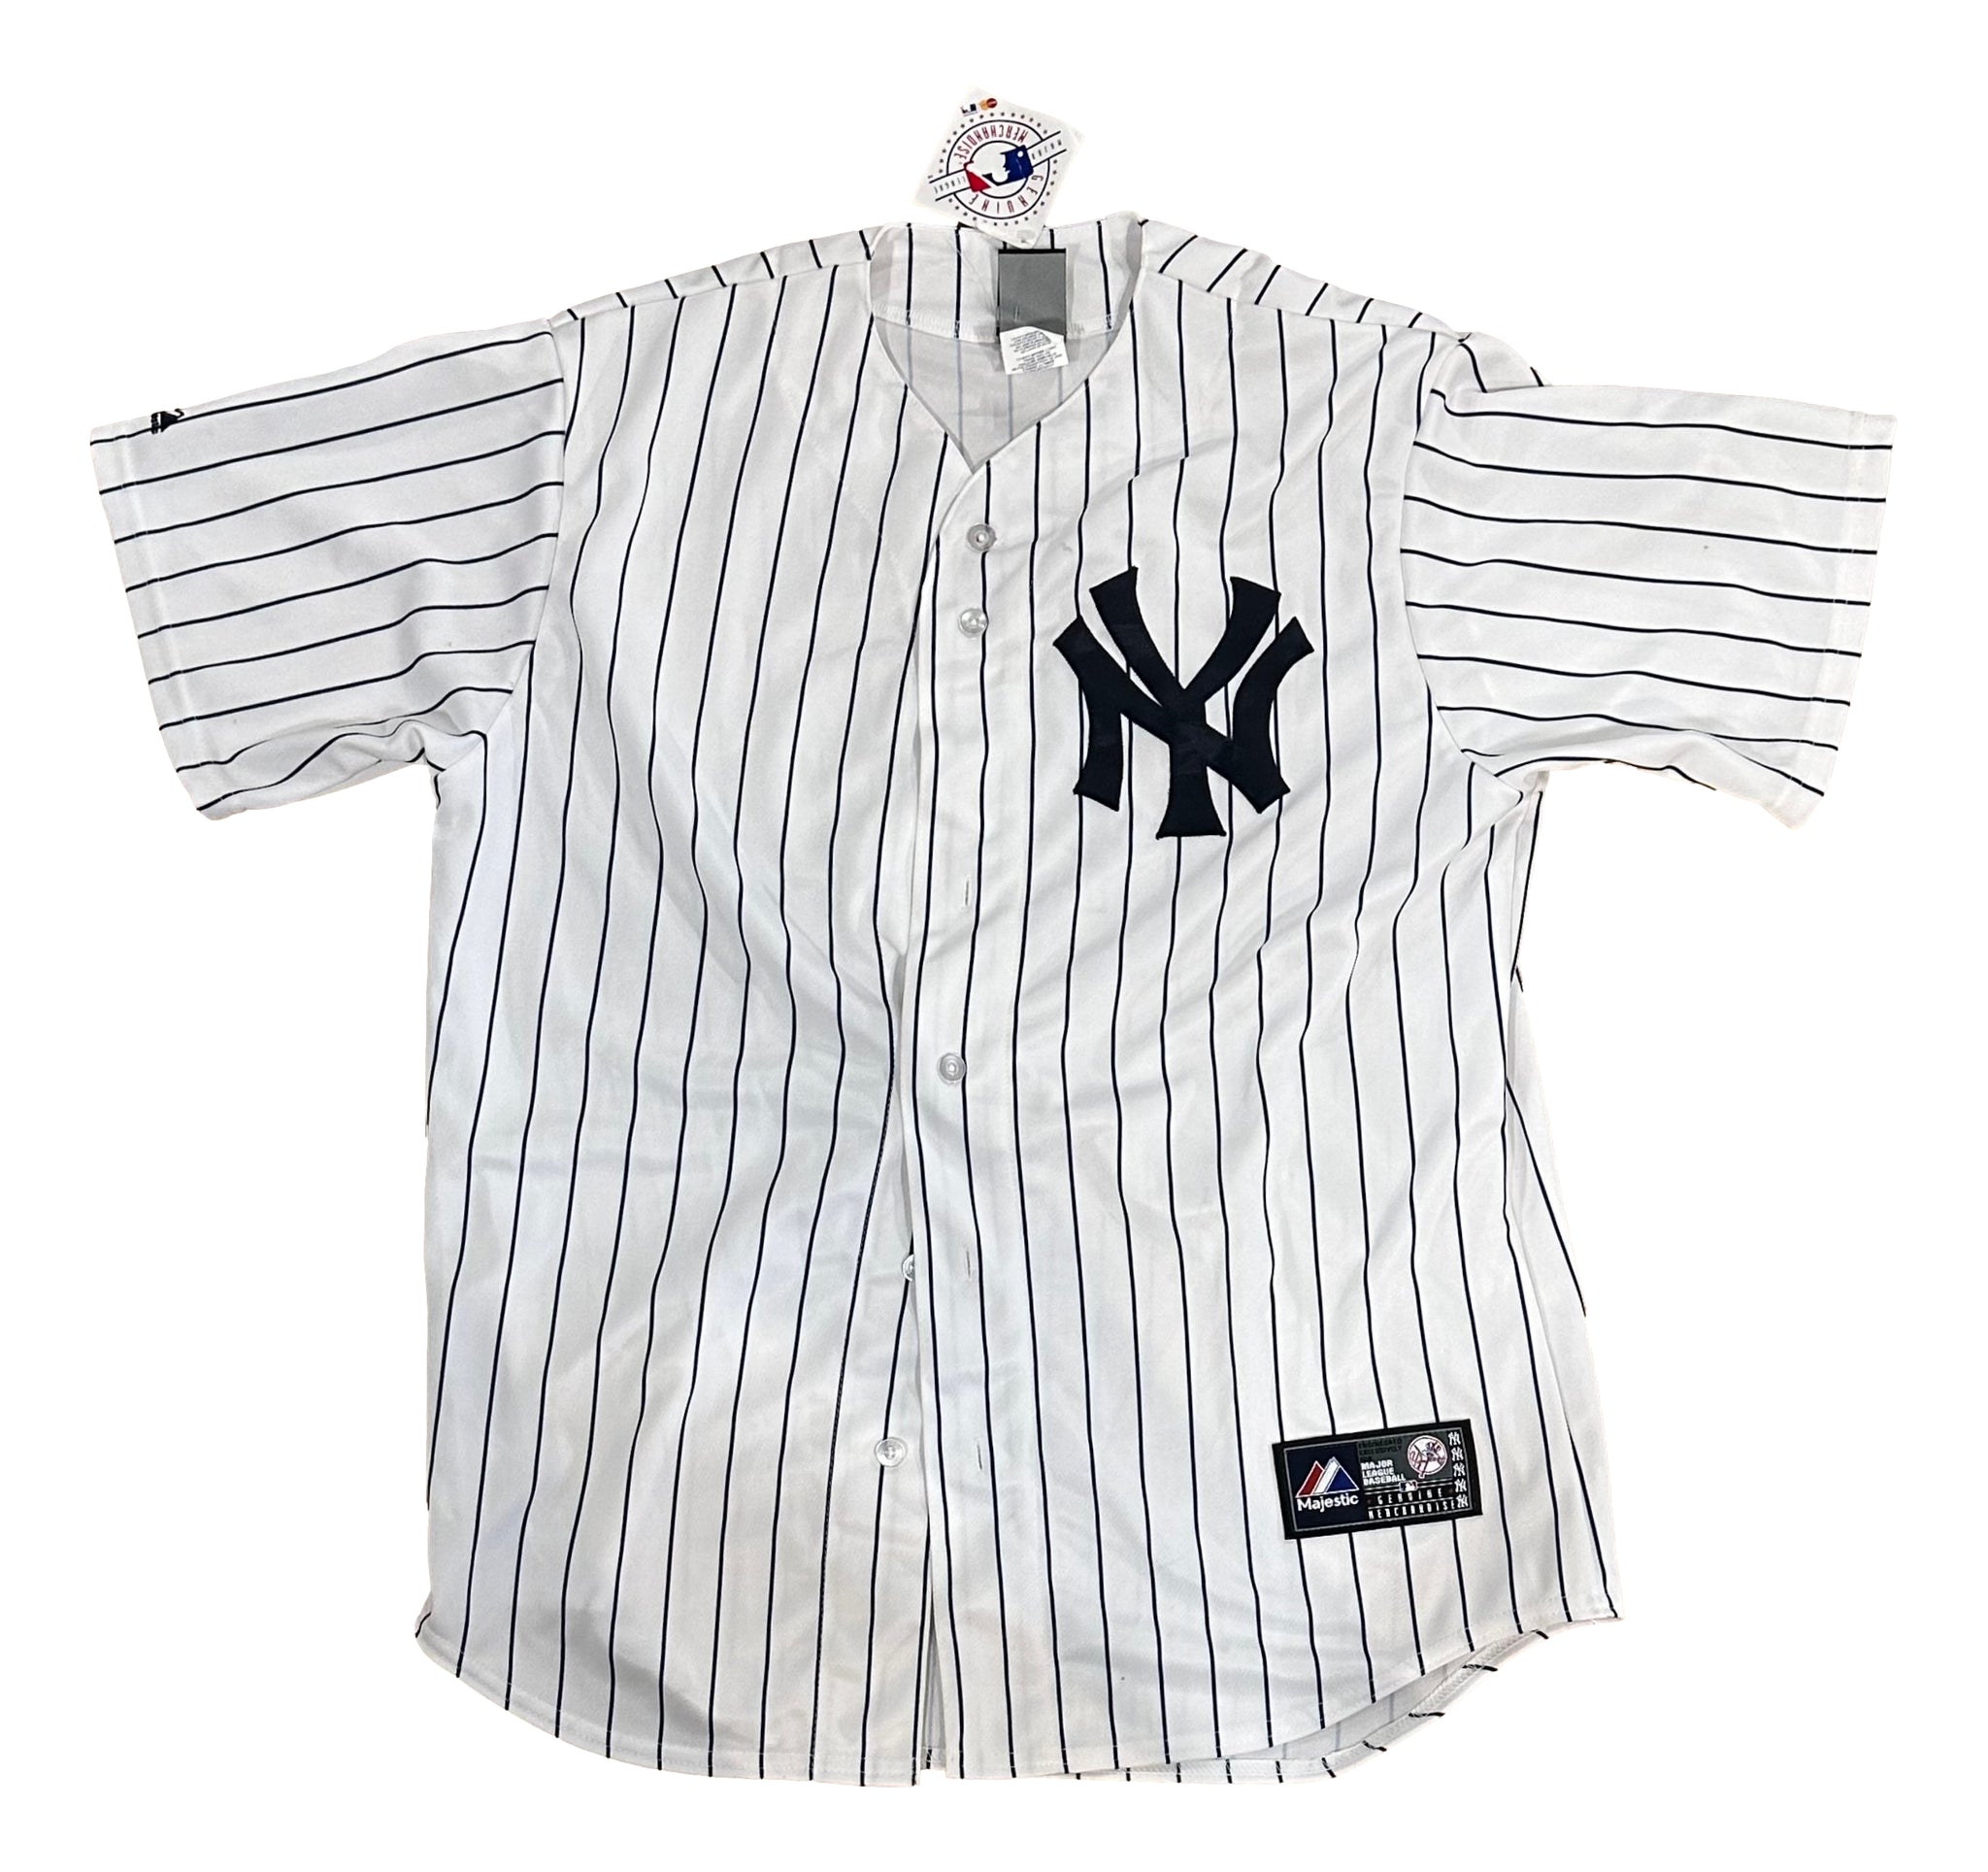 Derek Jeter Autographed Authentic New York Yankees Pinstripe Jersey